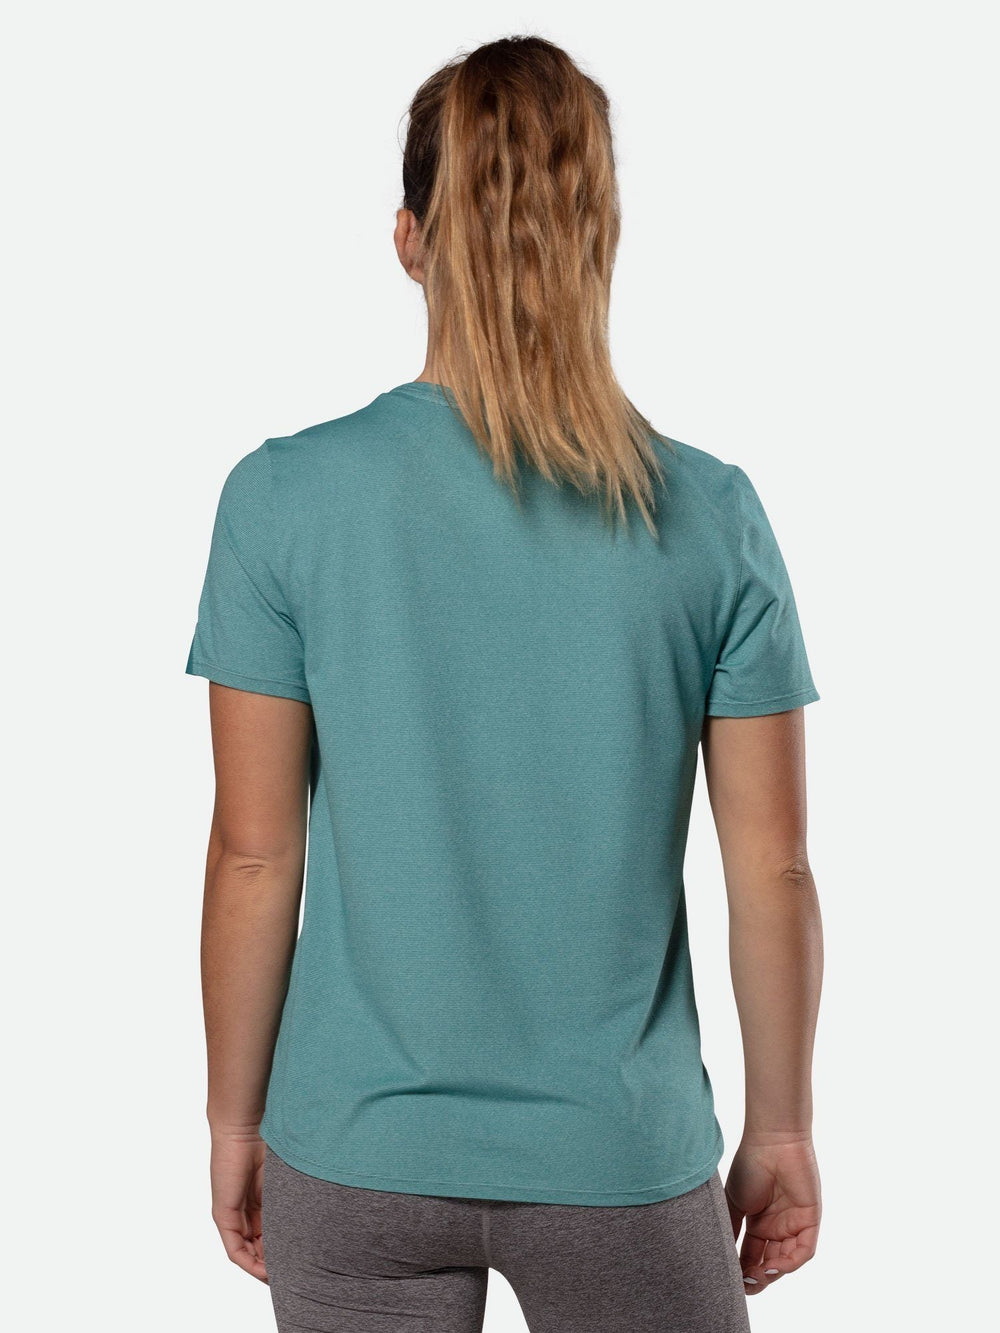 Women's Reflective Long Sleeve Shirt - Didn't Train